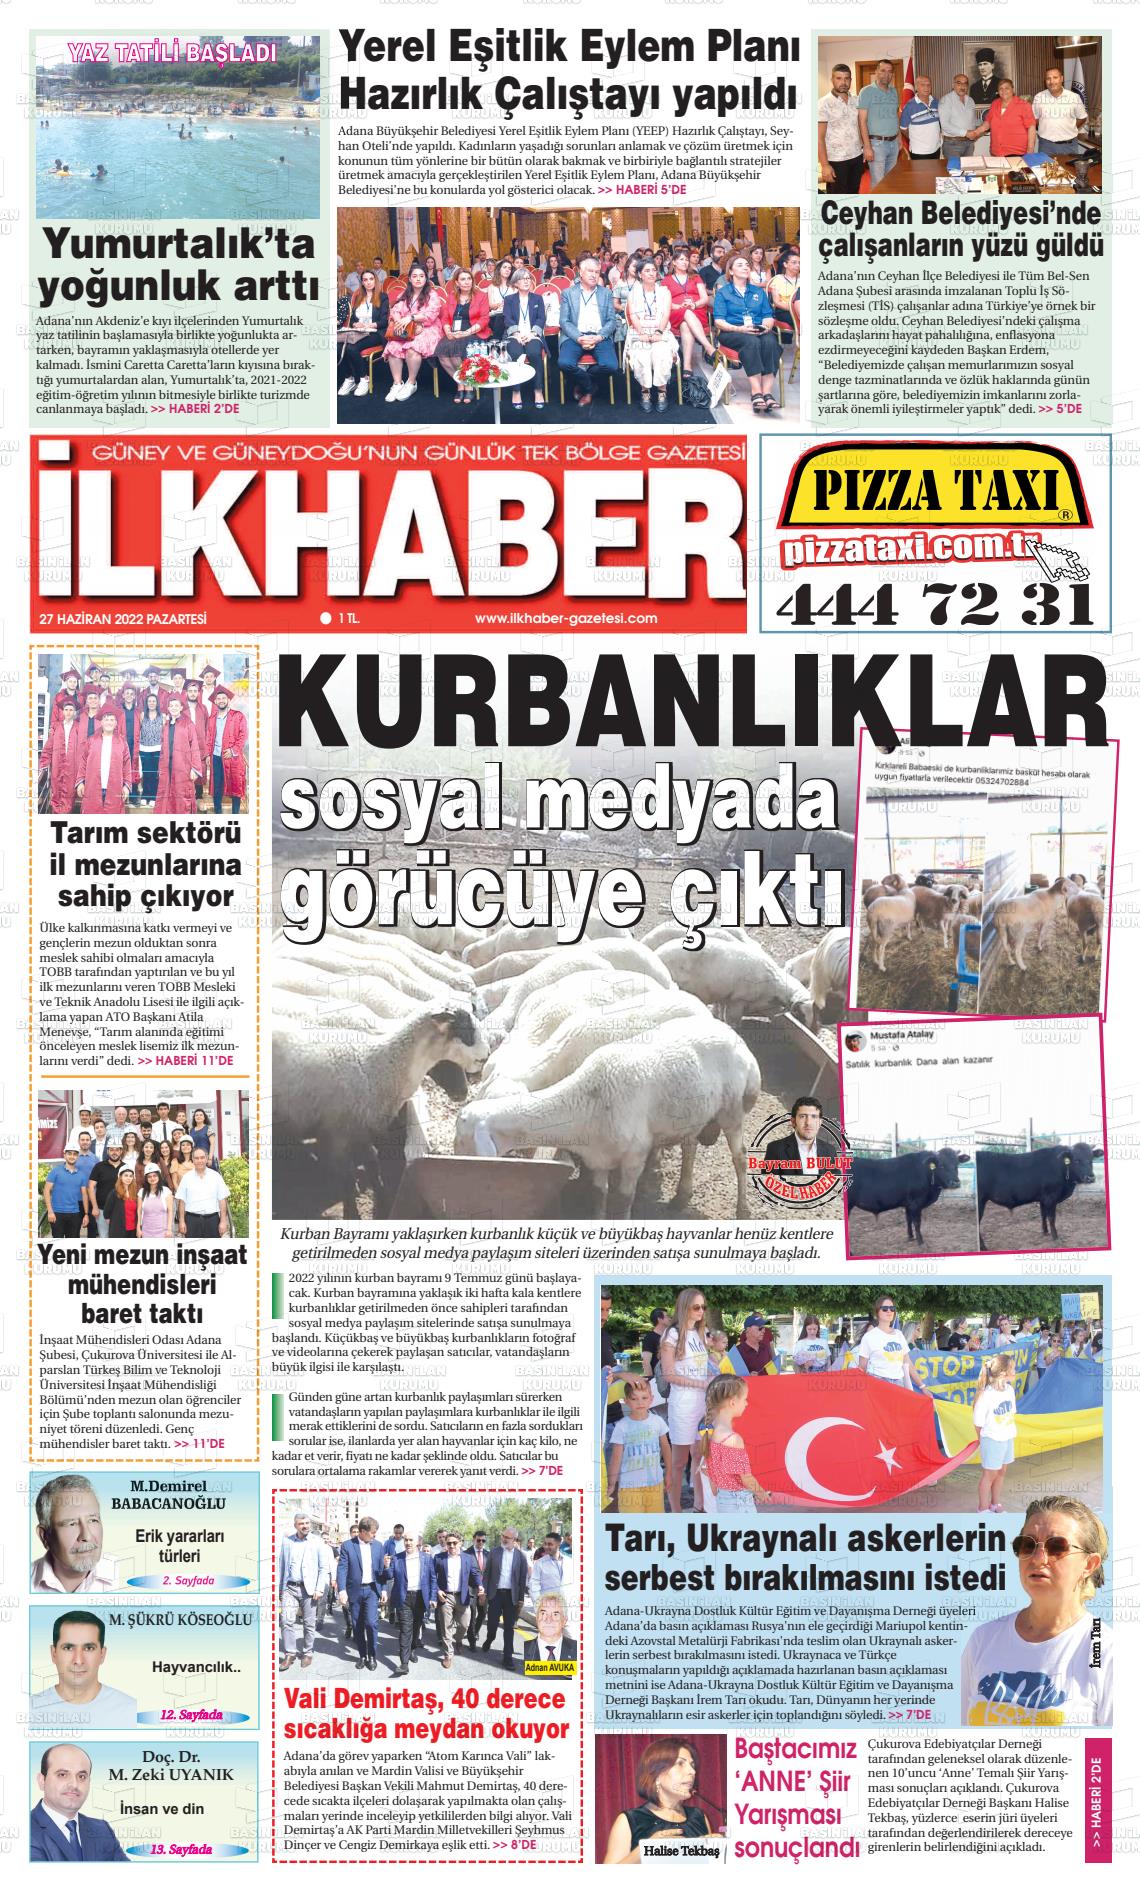 27 Haziran 2022 İlk Haber Gazete Manşeti